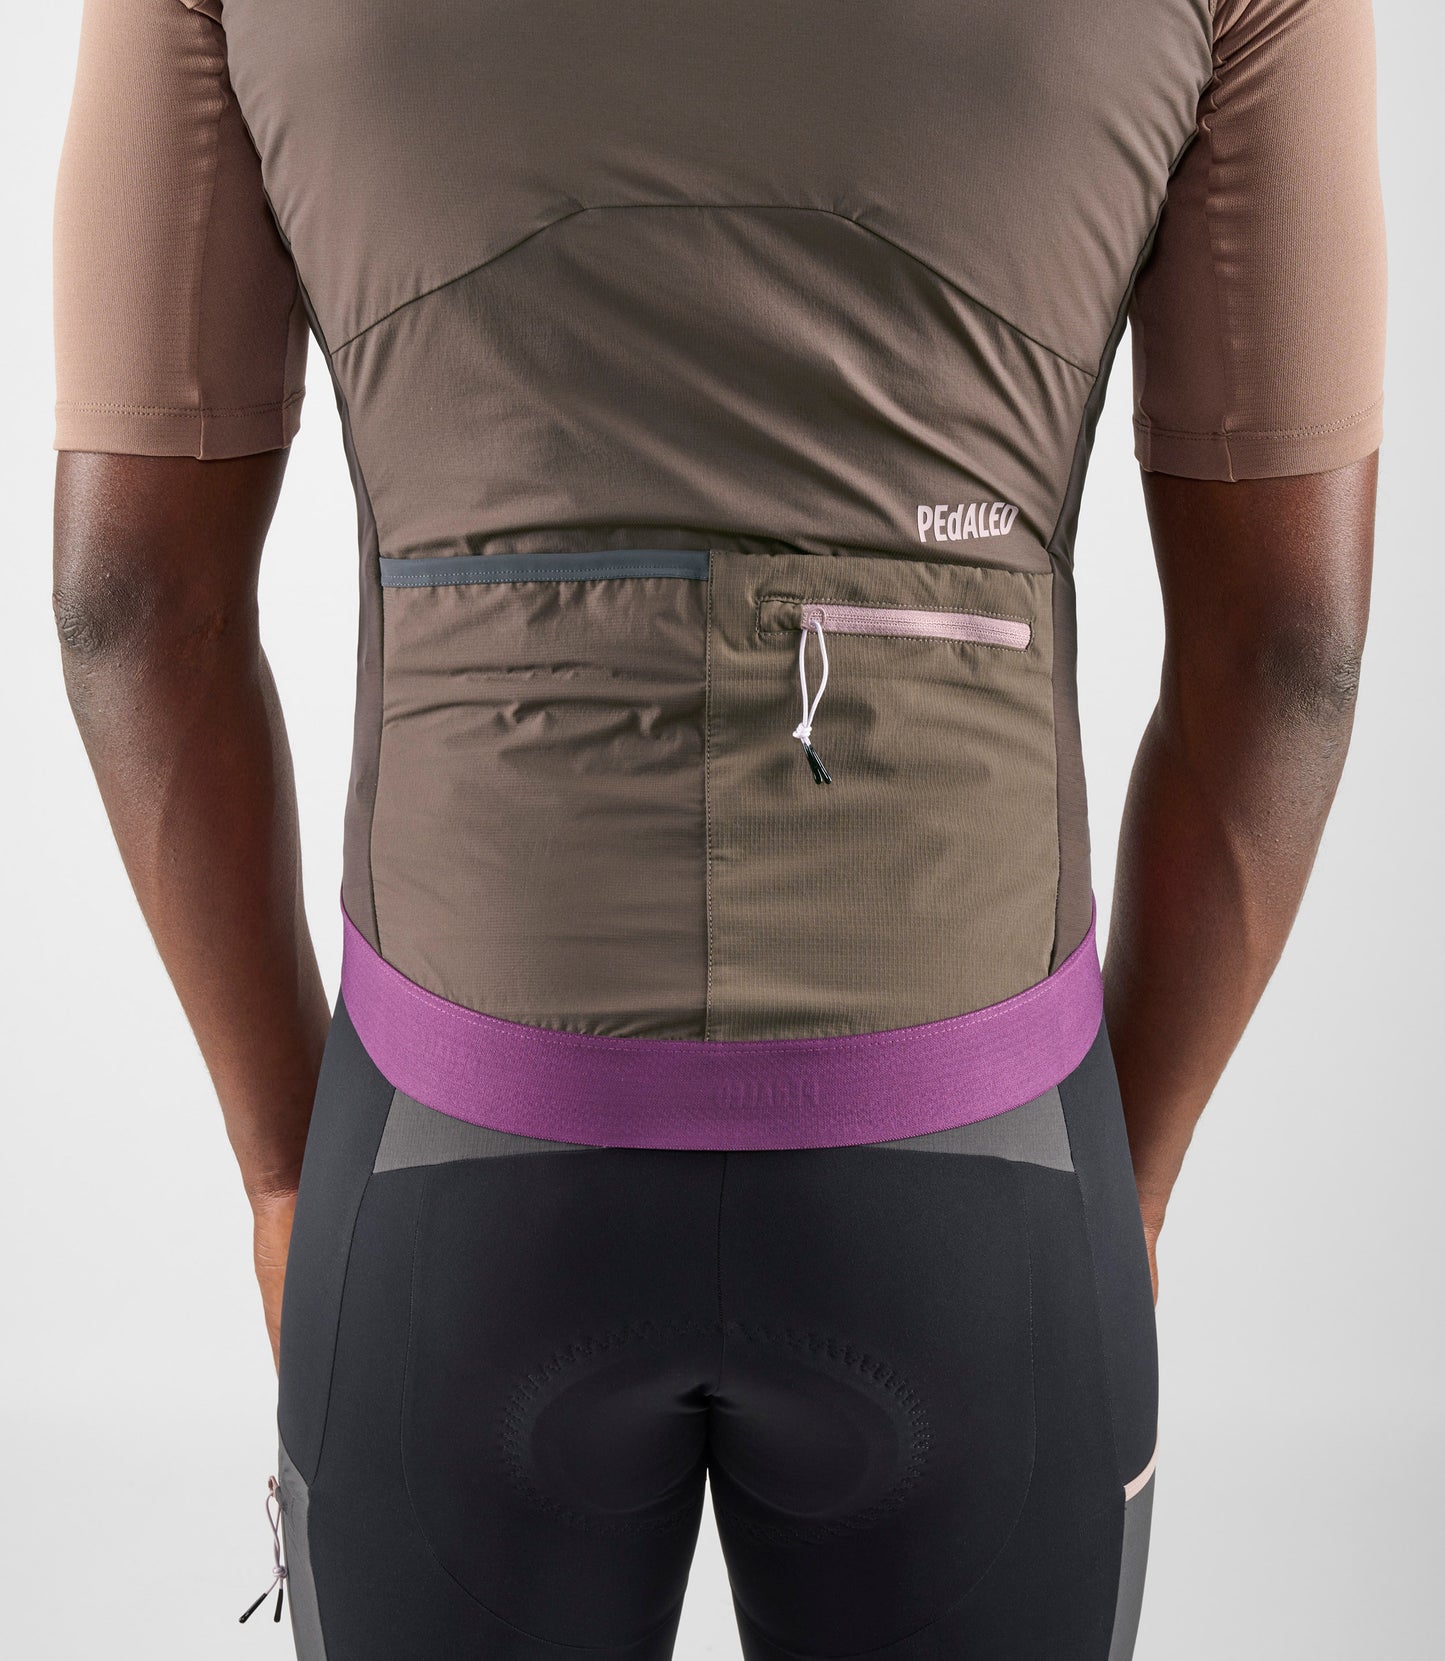 24SVEOD10PE_7_men cycling insulated vest purple odyssey back pocket pedaled